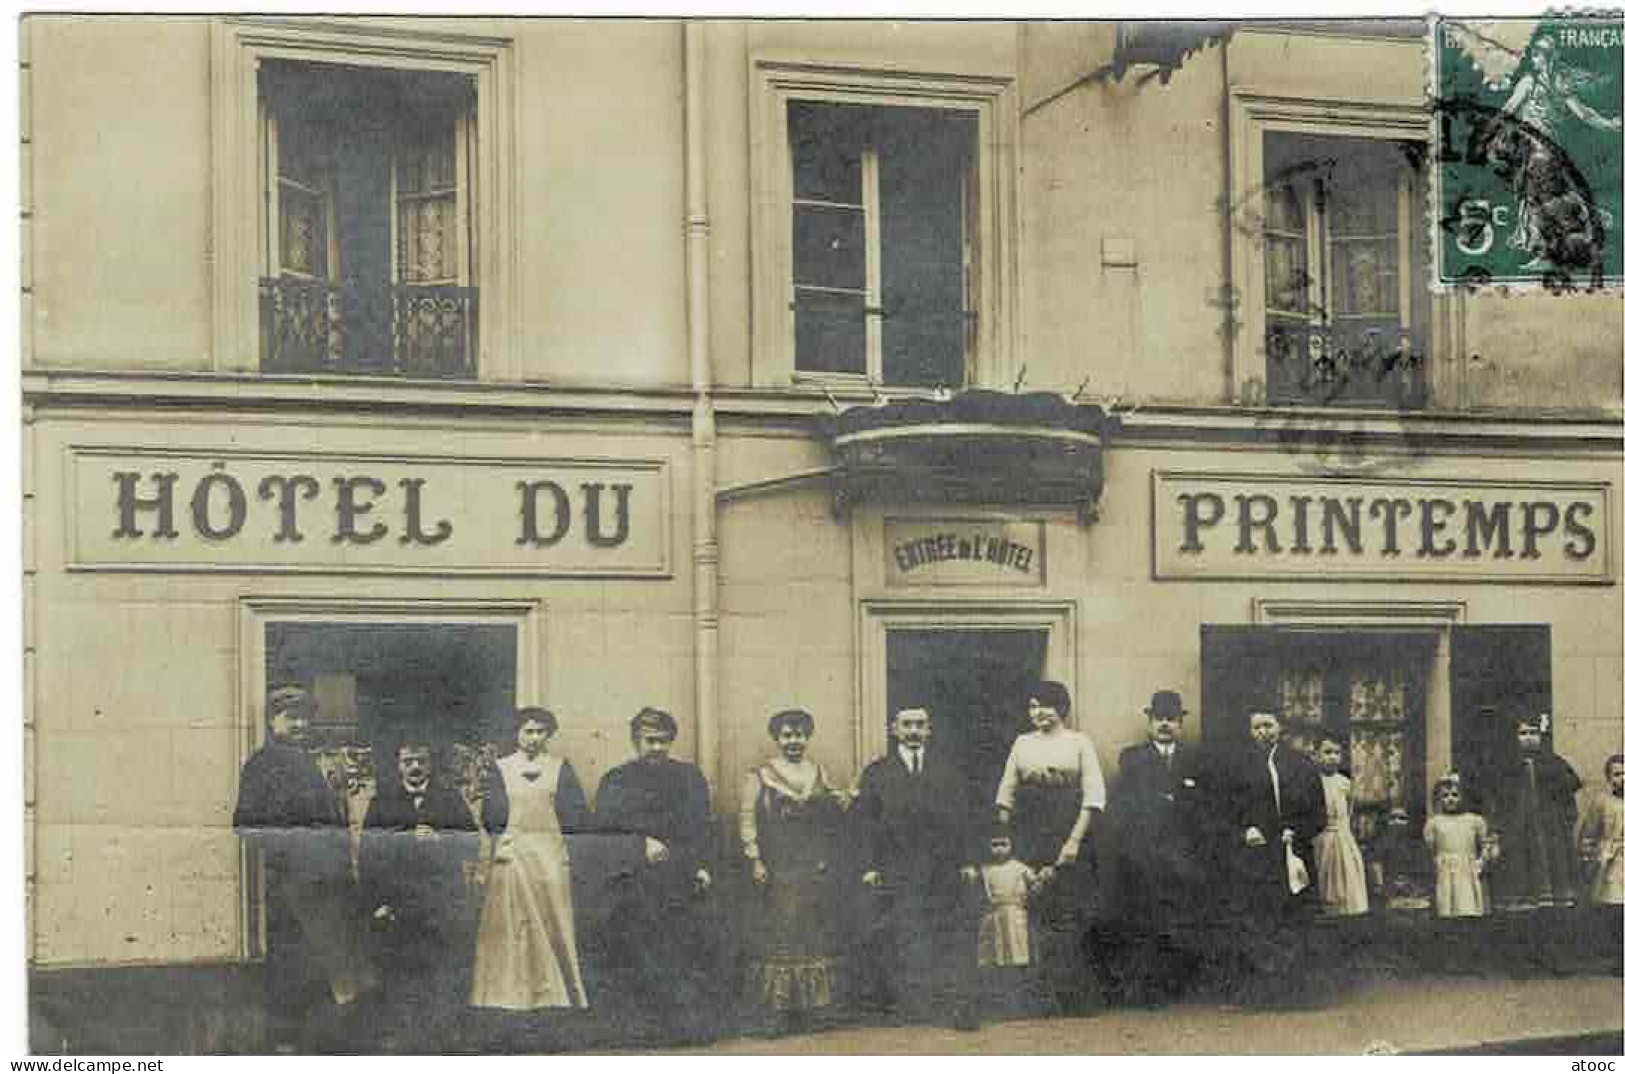 Hôtel du Printemps, 25 Rue Morand, Paris 11e